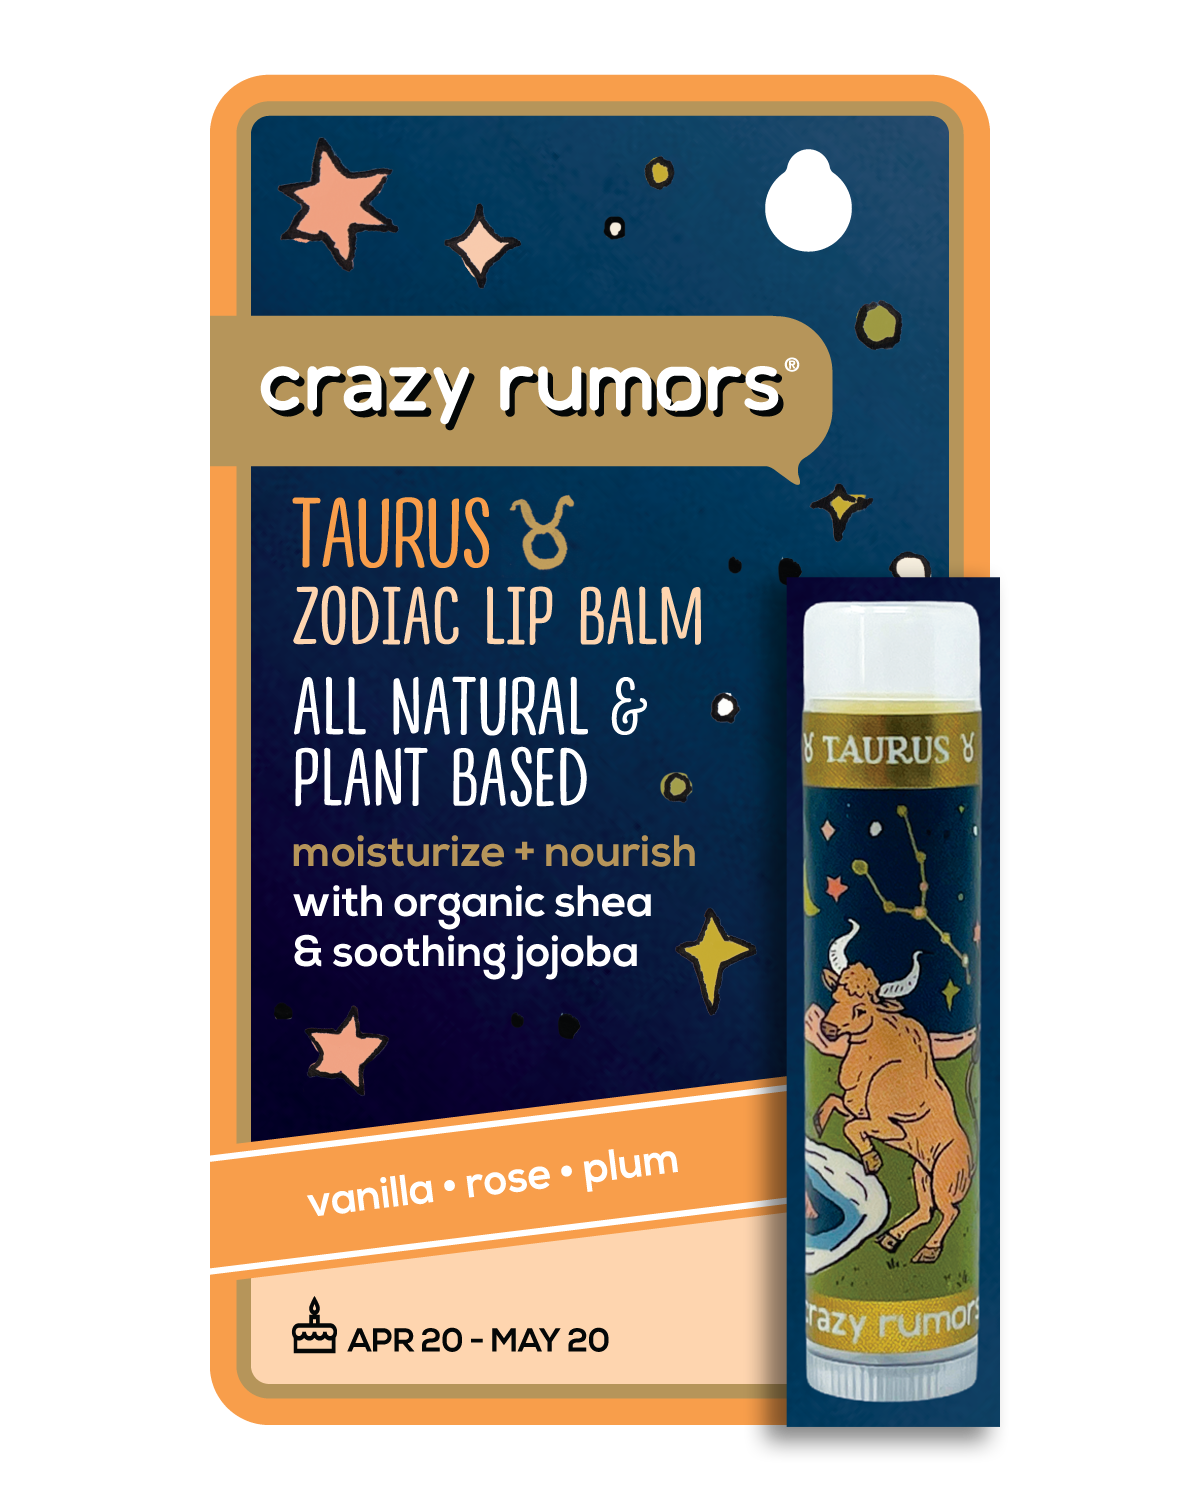 Crazy Rumors - Taurus Zodiac Lip Balm